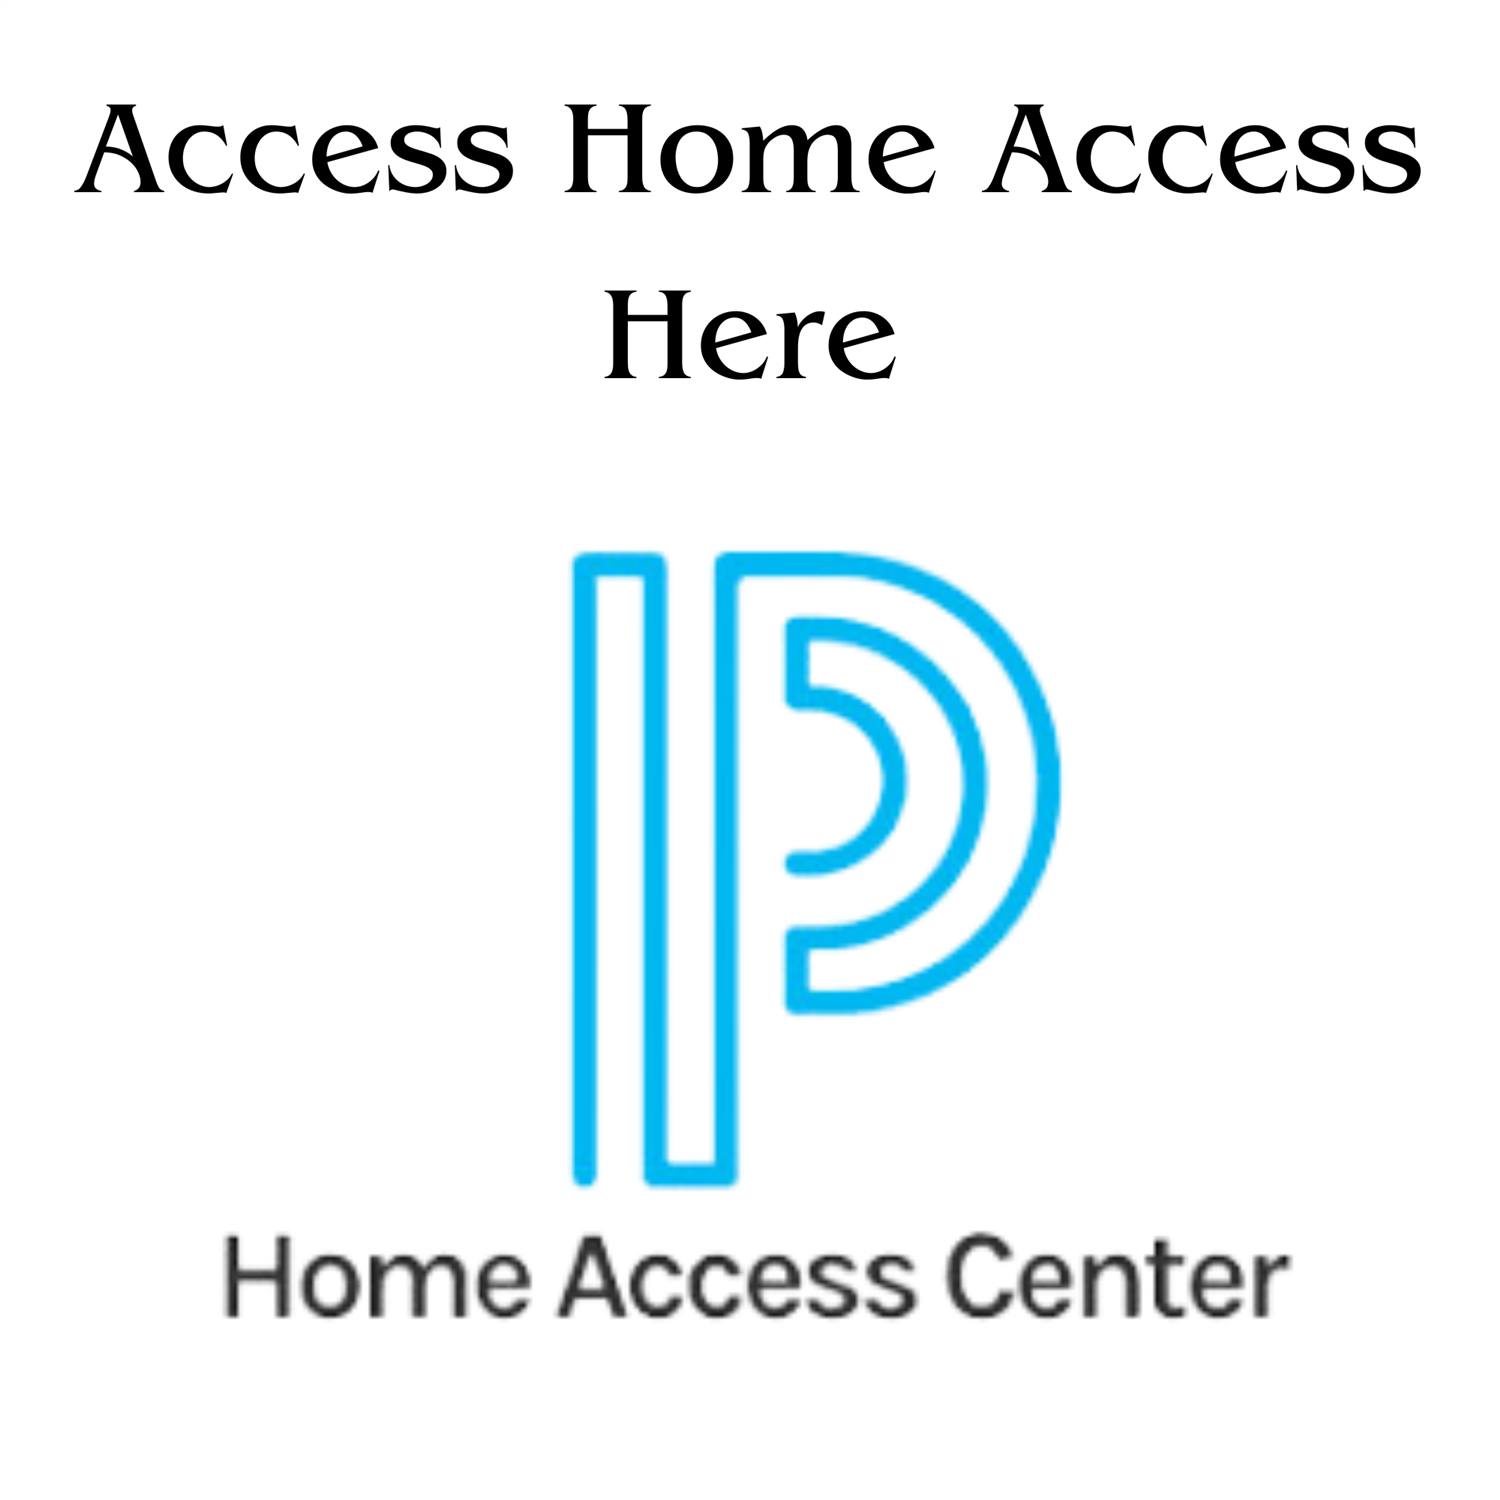  Home Access